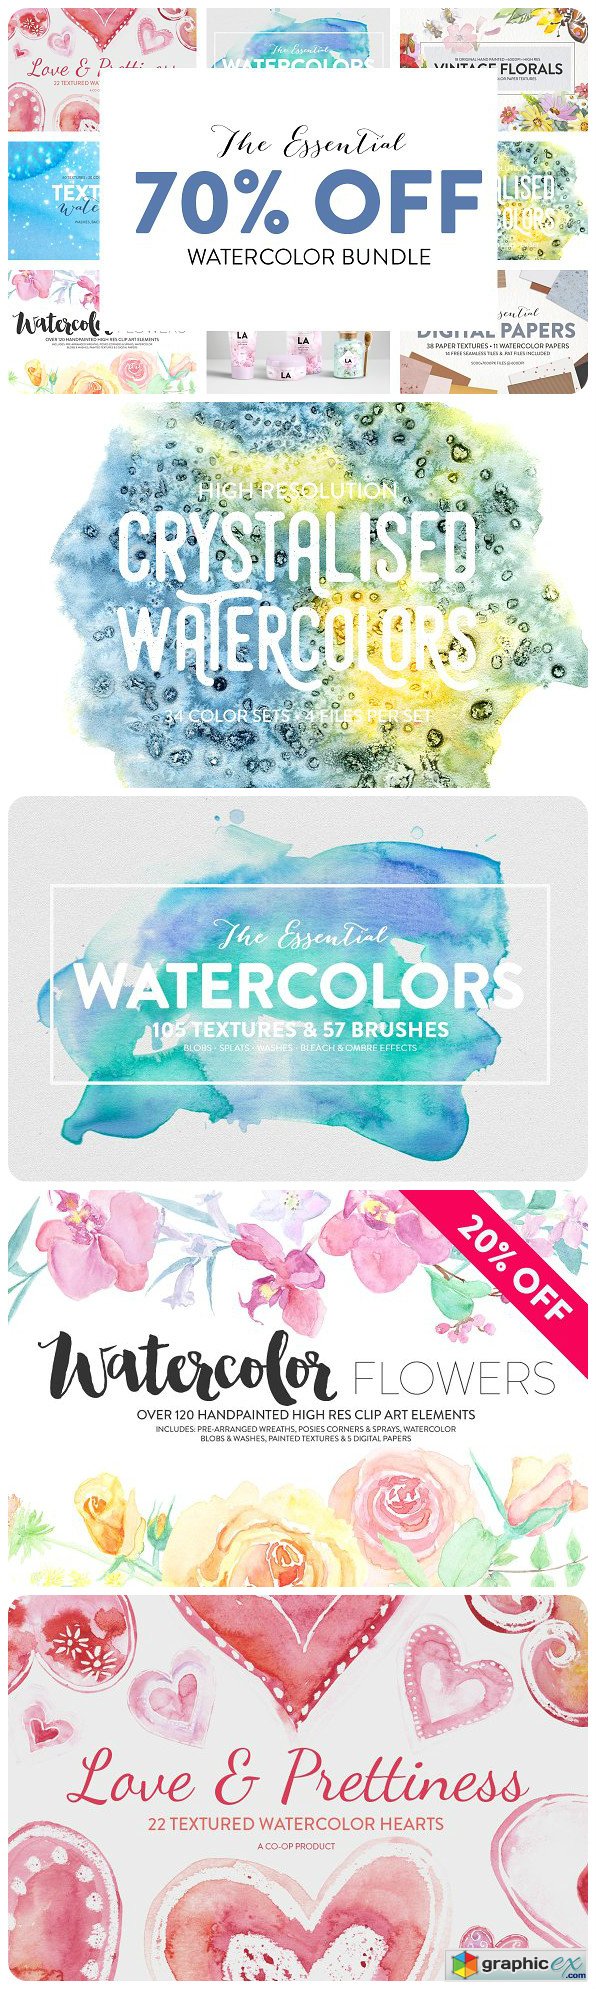 The Watercolor bundle